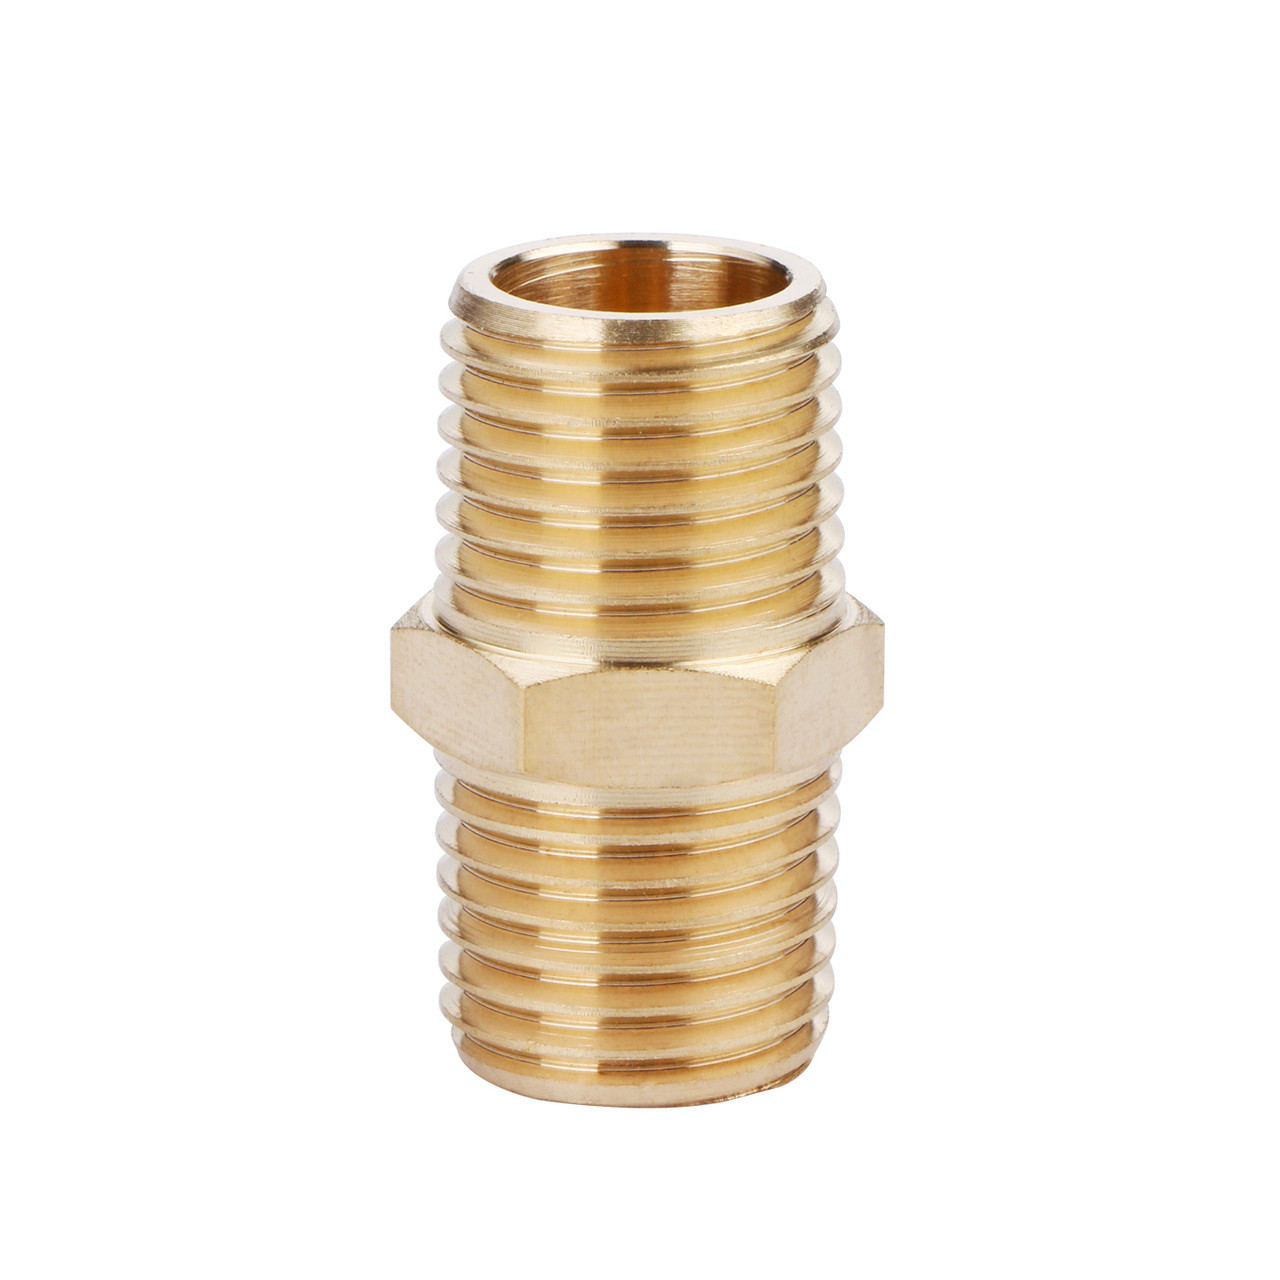 U.S. Solid Brass Hex Nipple - 1/4 x 1/4 NPT Male Pipe Fitting Adapter, 3/